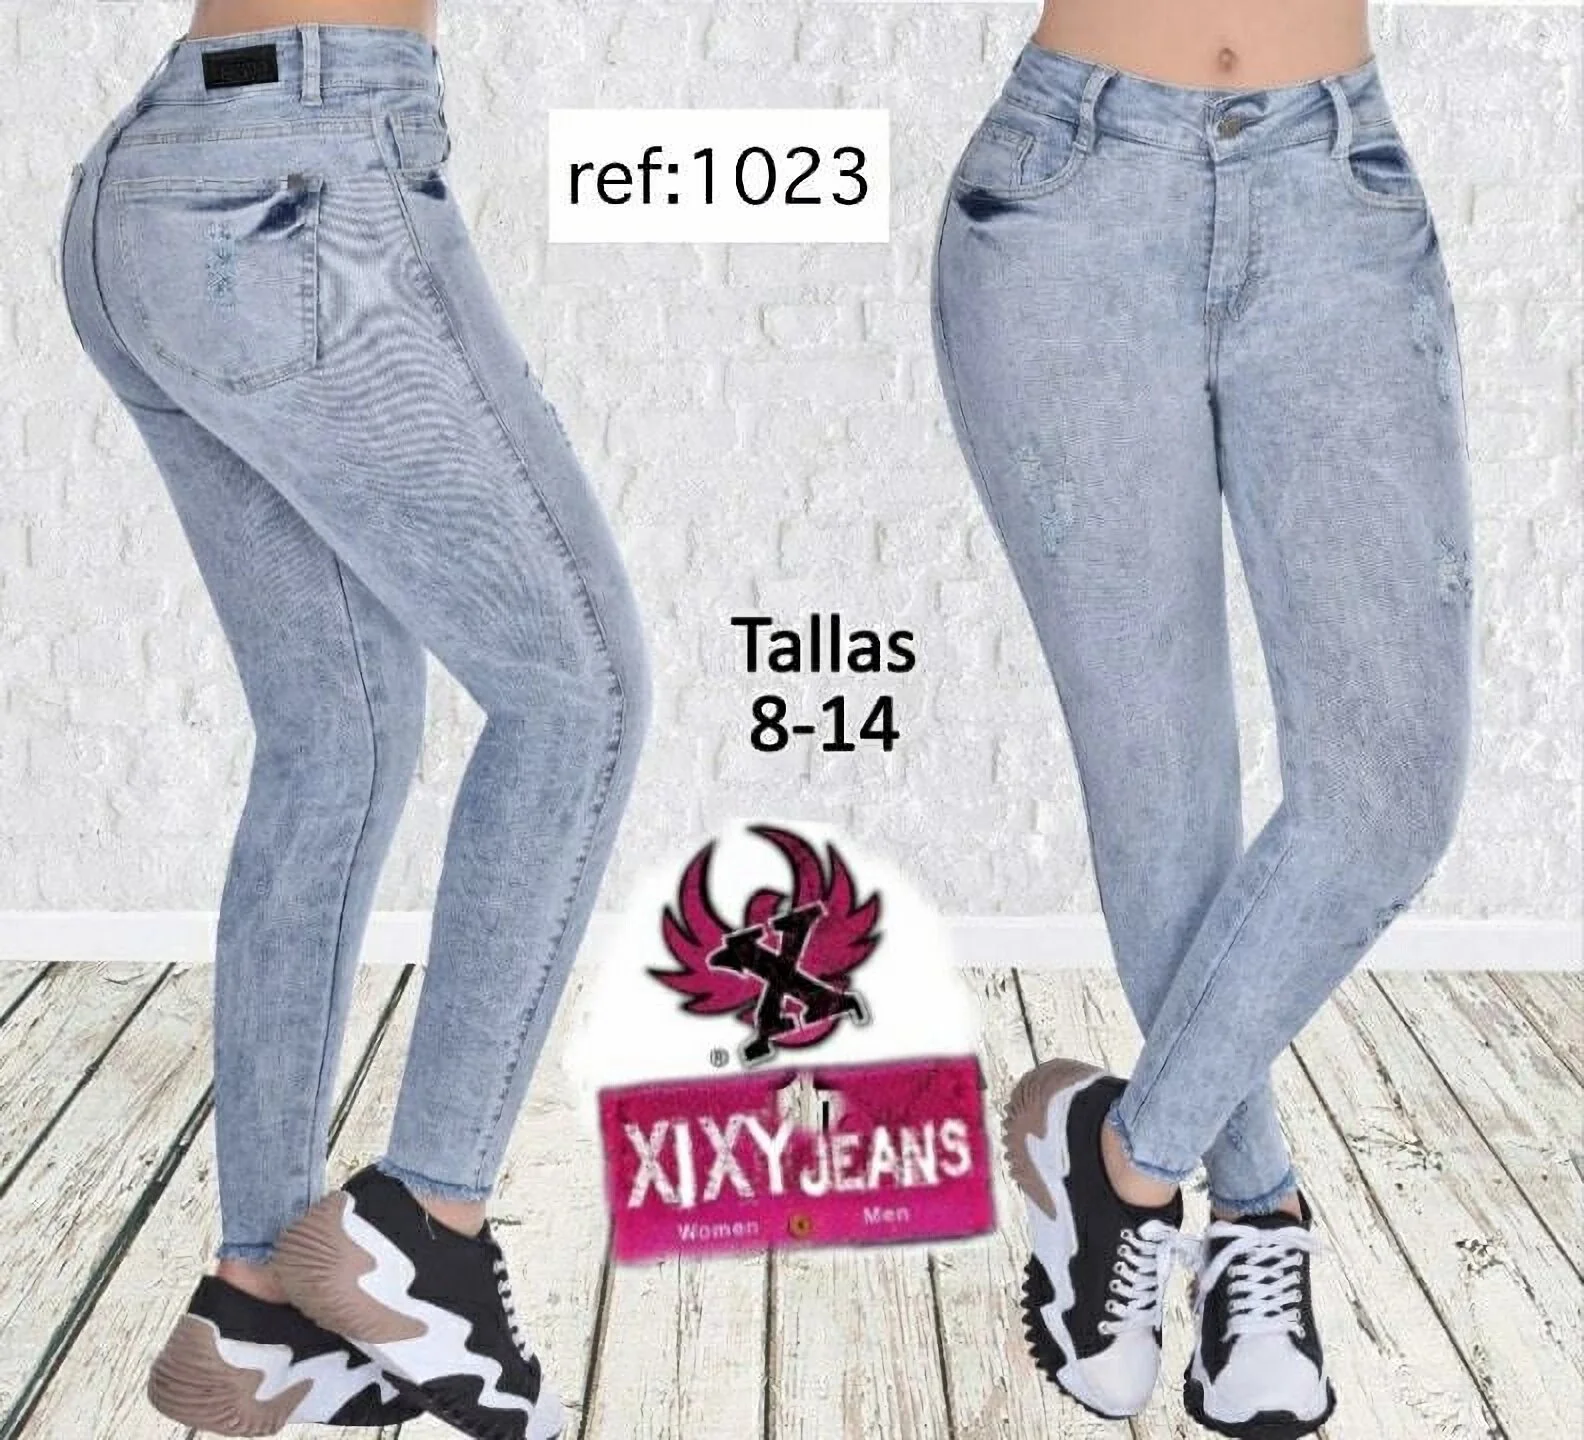 Ropa-xixy-jeans-16159